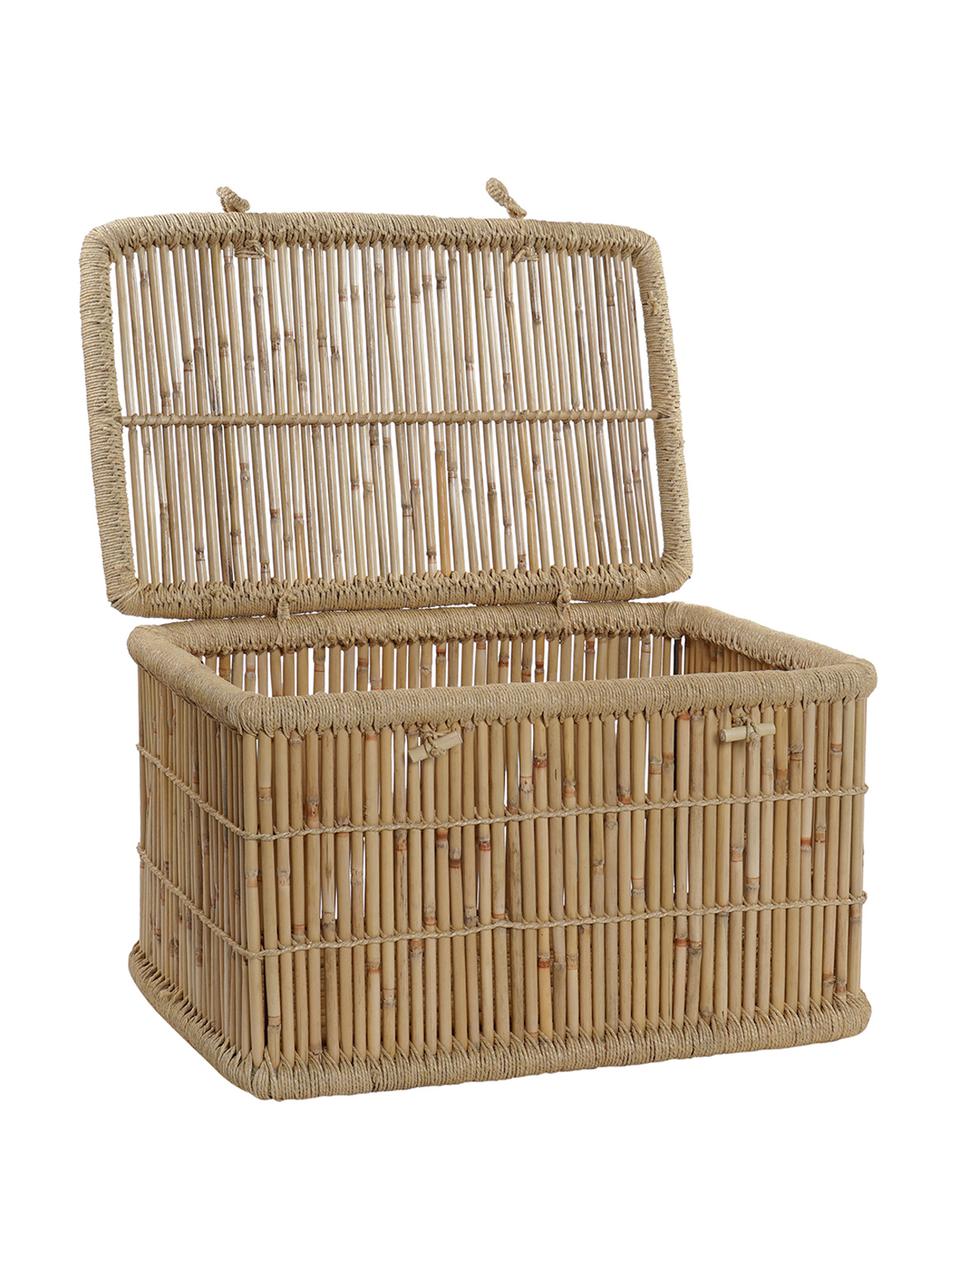 Set de cajas Nina, 2 pzas., Caja: bambú, Beige, Set de diferentes tamaños